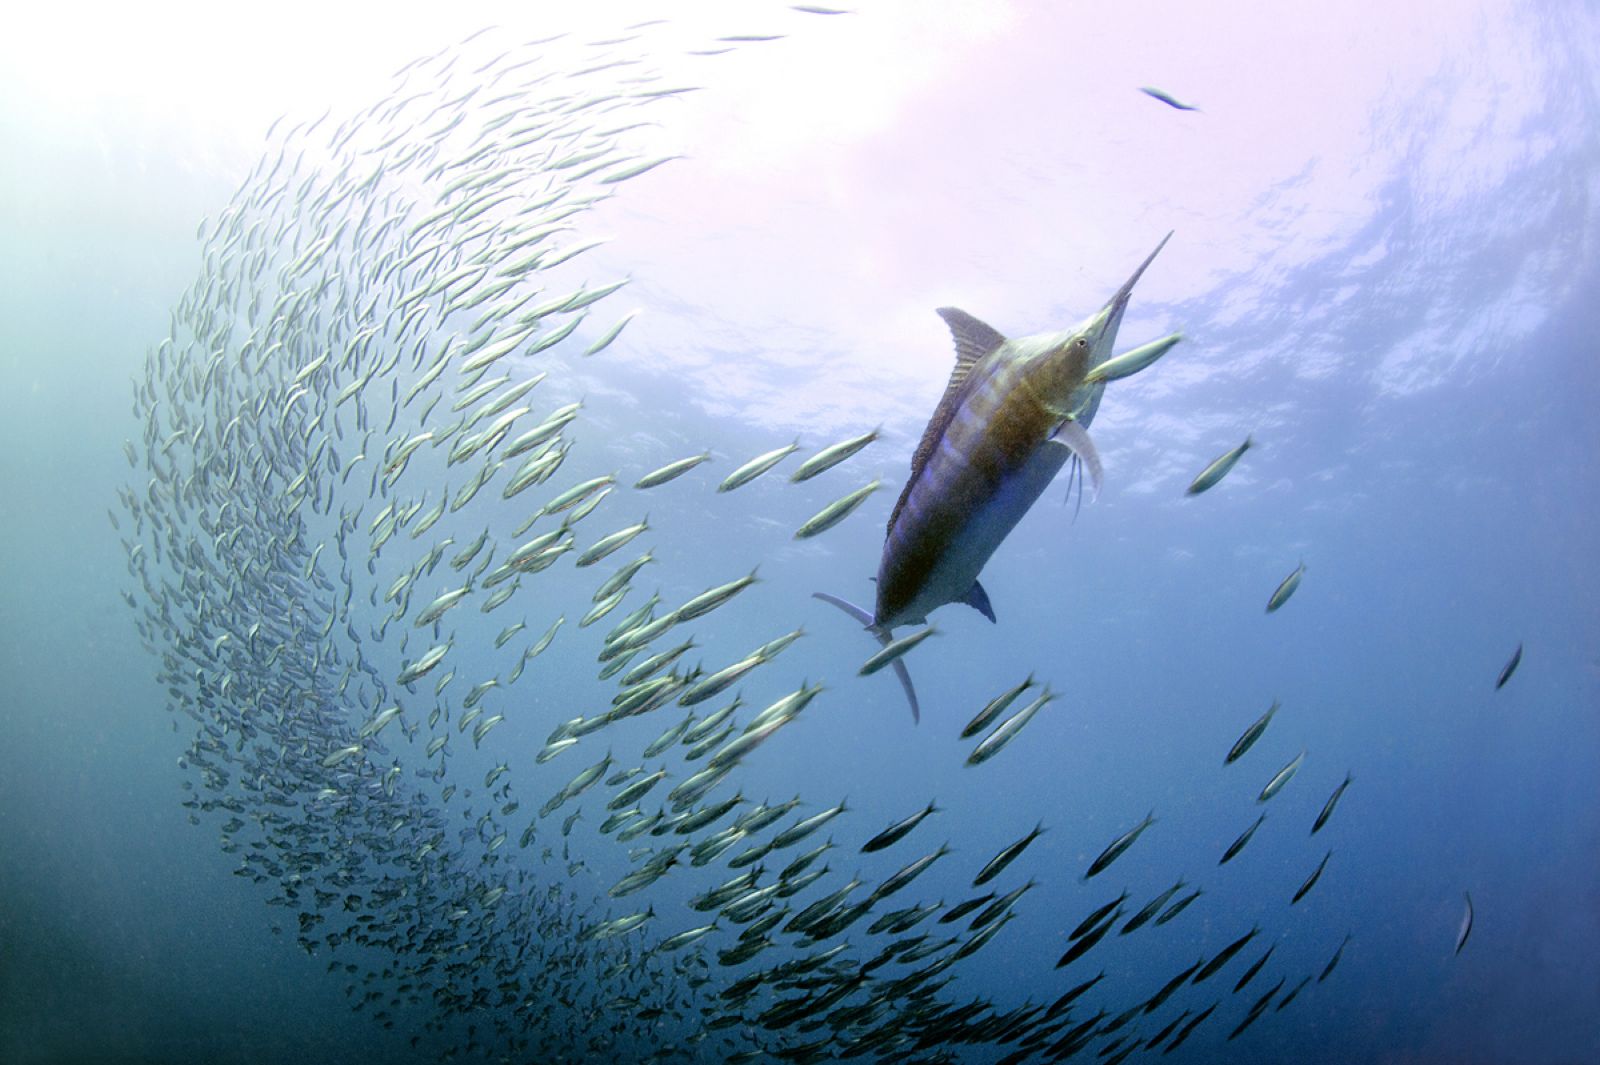 Photo credit - Daniel Botelho - Blue marlin with sardines (DLB_6599)